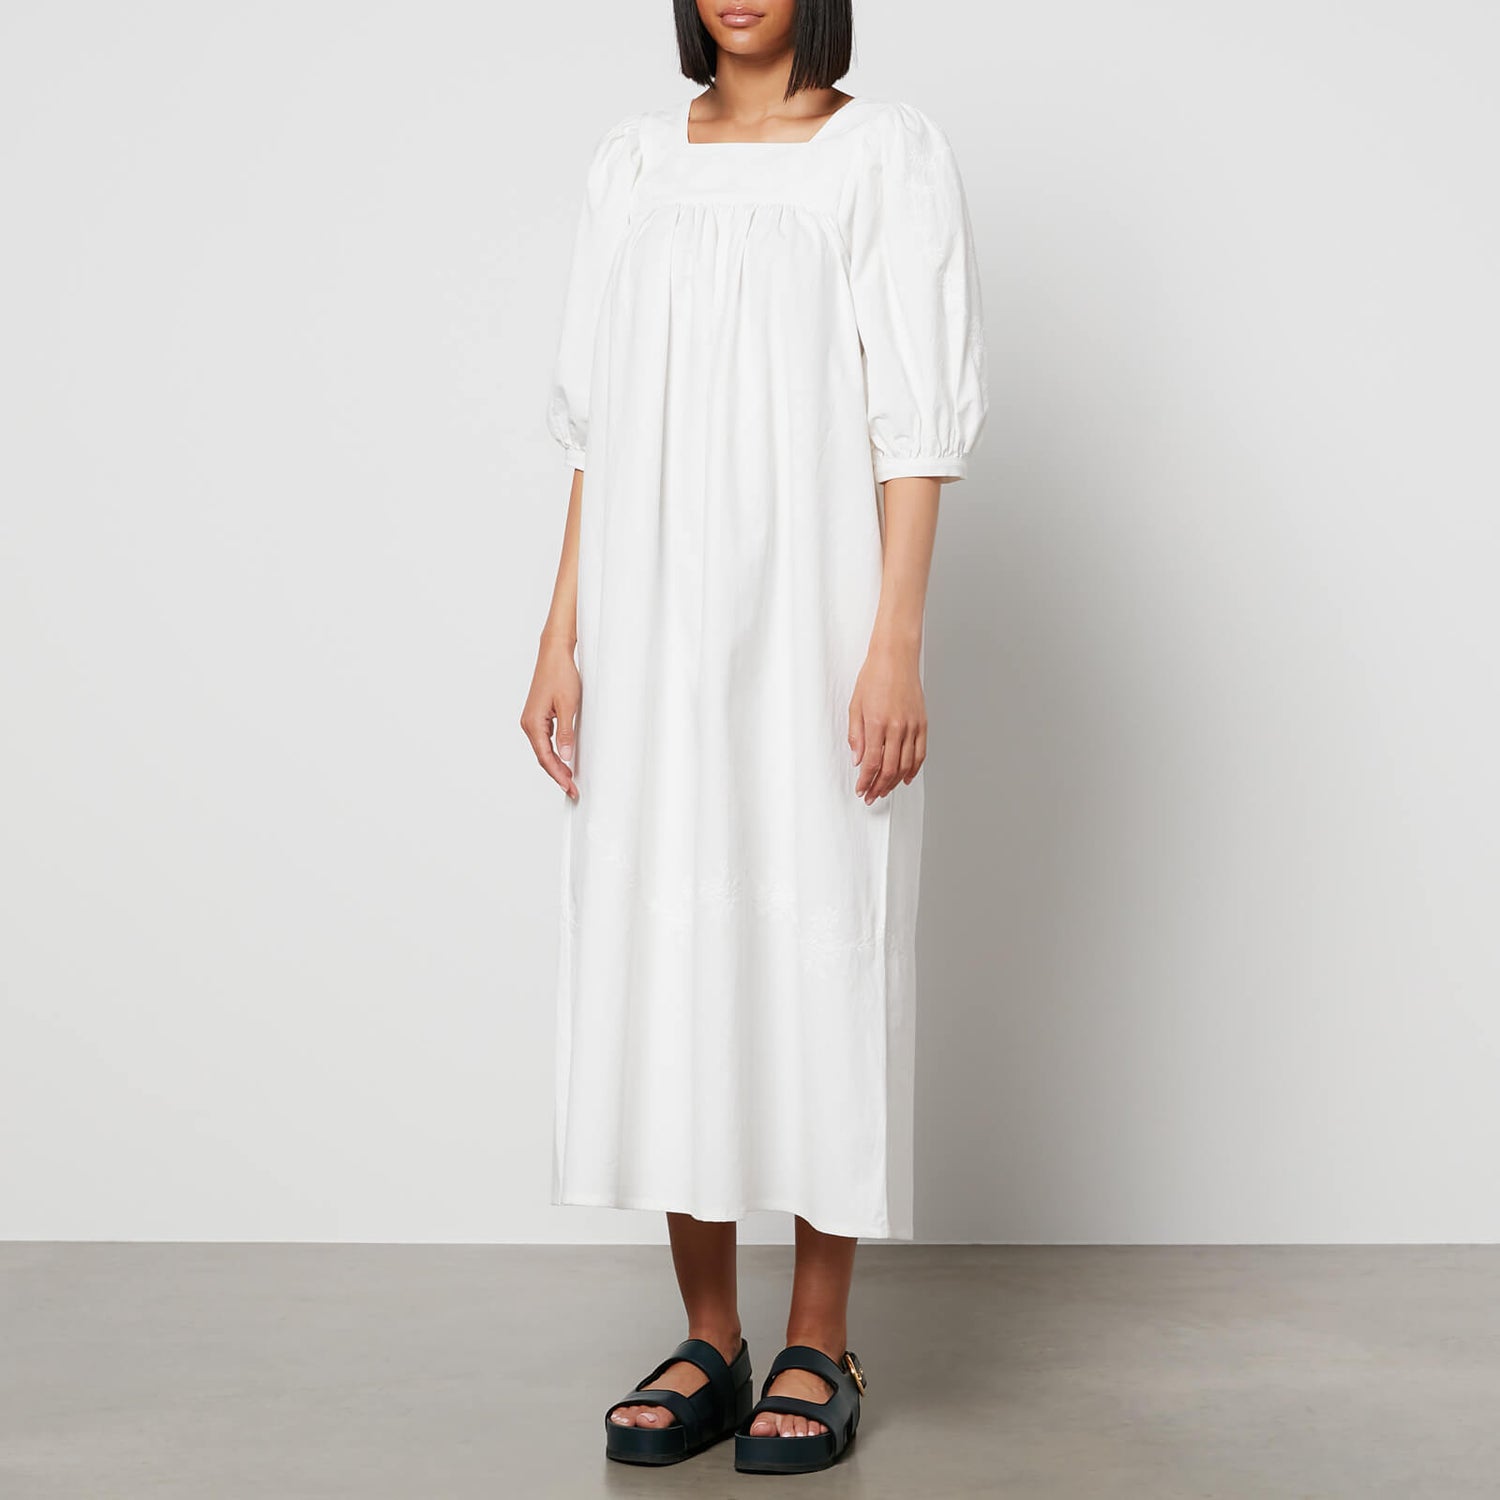 Meadows Women's Crocus Dress - White